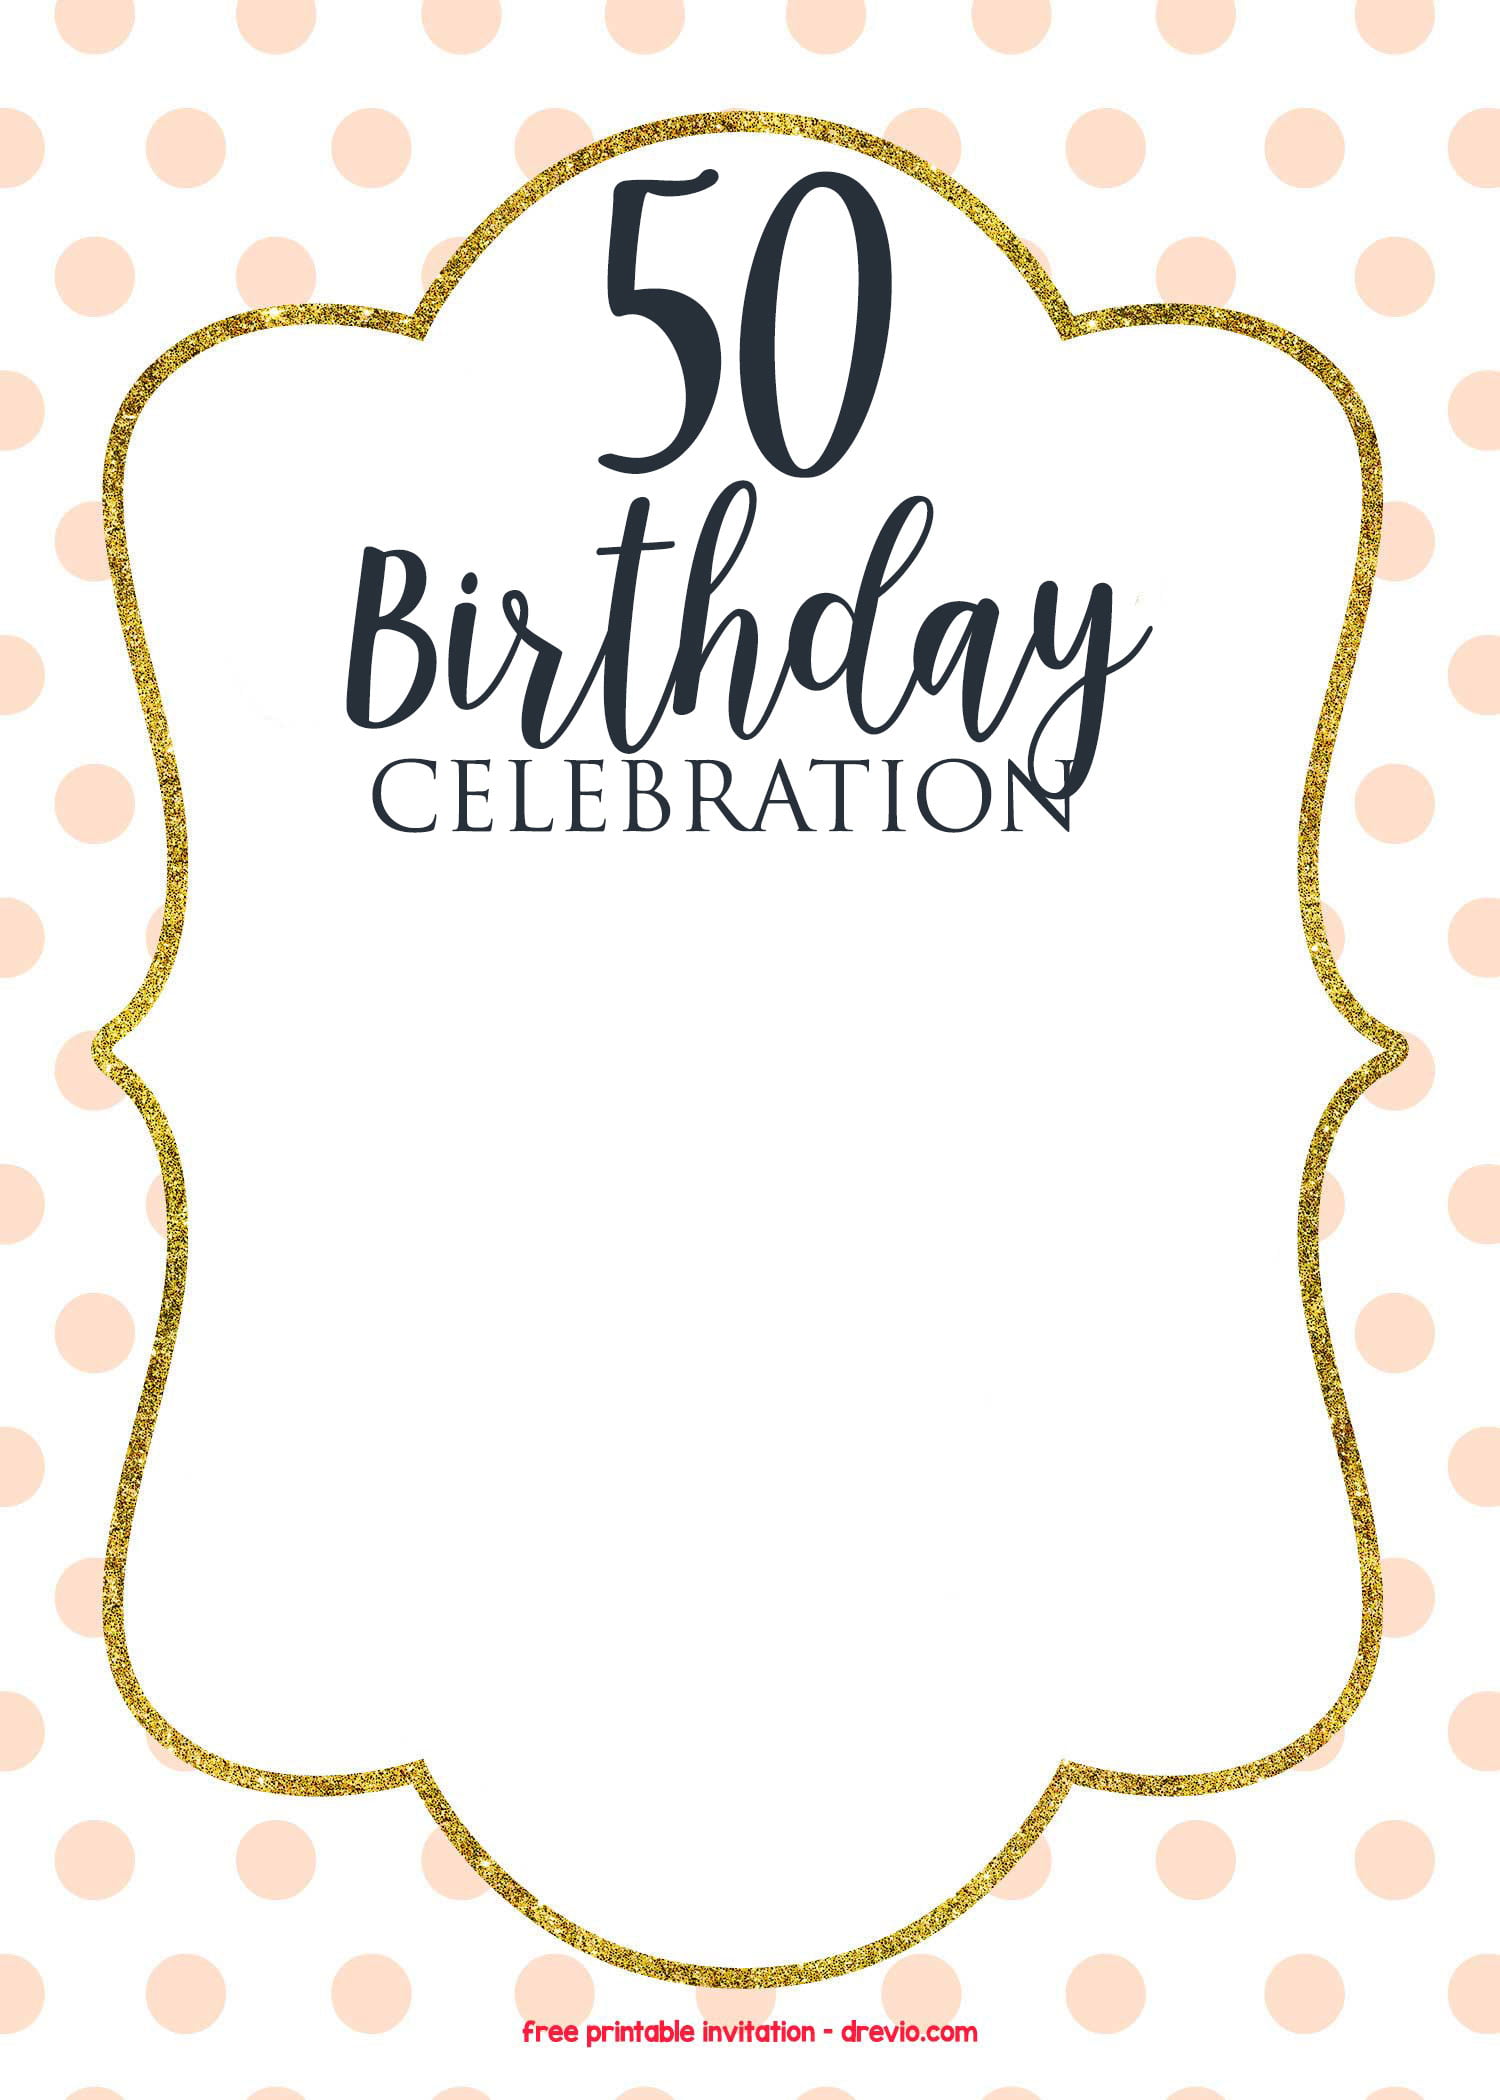 50th Birthday Invitations Online | Download Hundreds FREE PRINTABLE Birthday  Invitation Templates